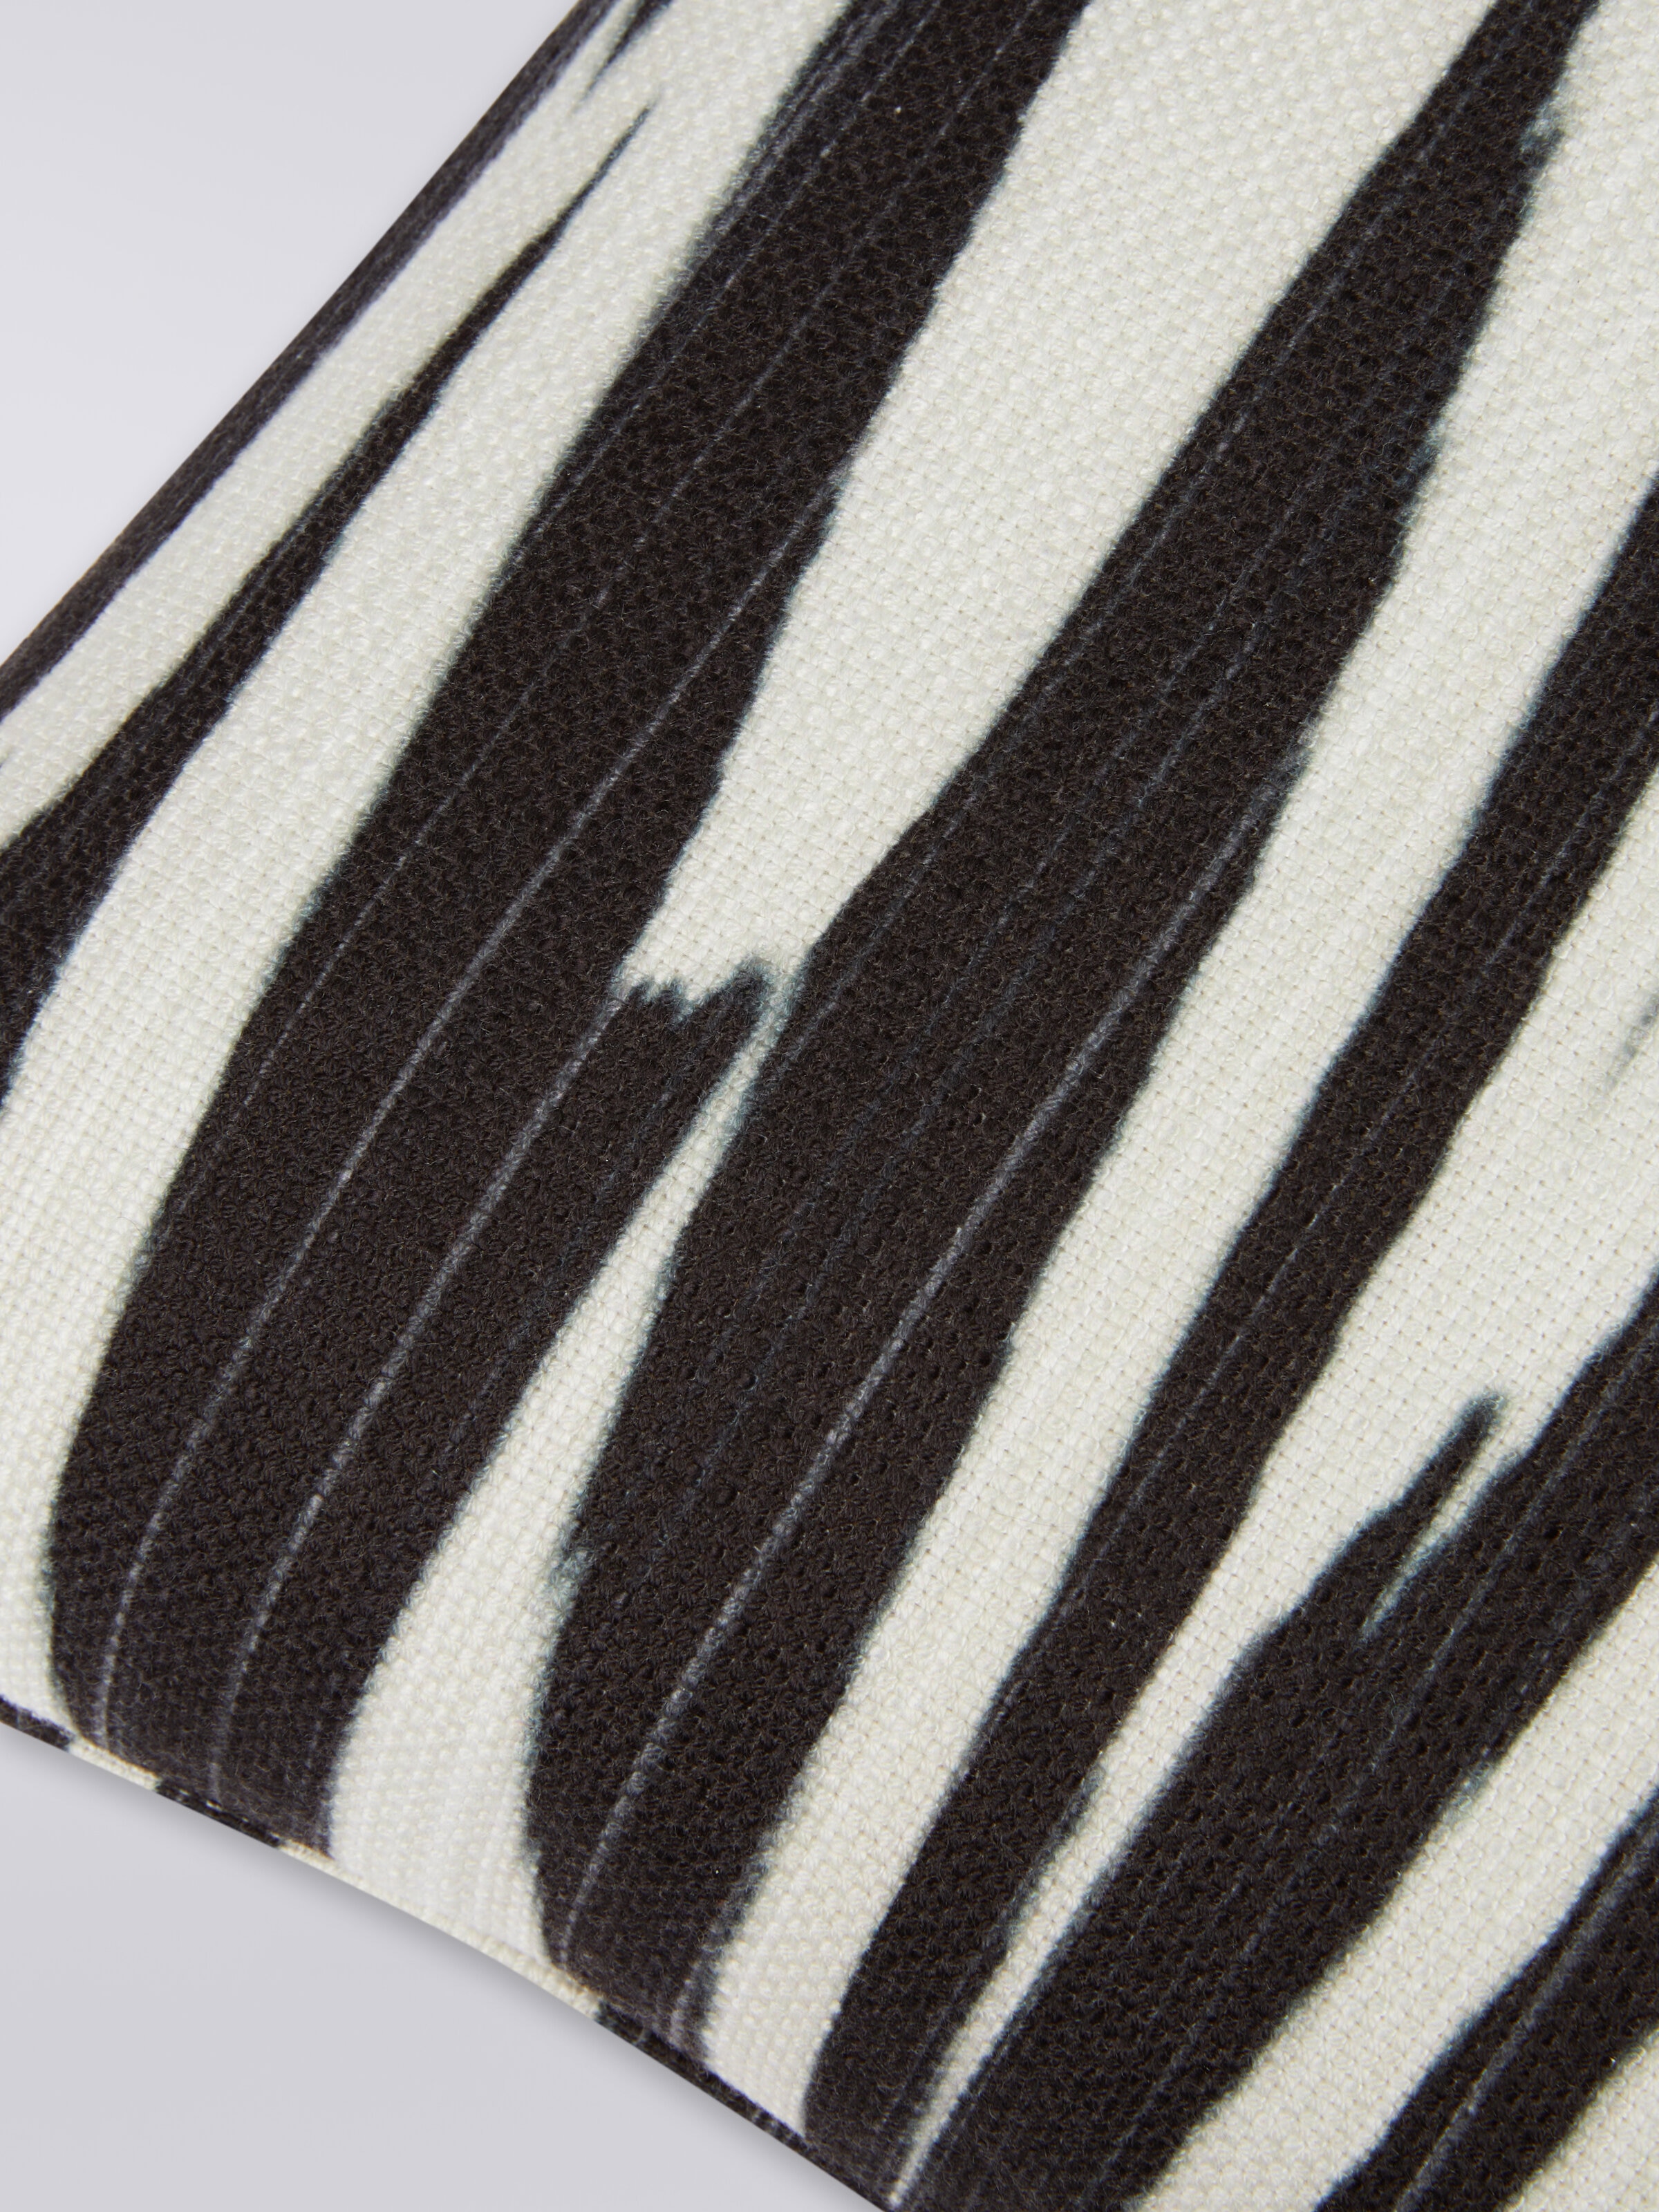 Atacama outdoor cushion 40x40 cm, Black & White - 2